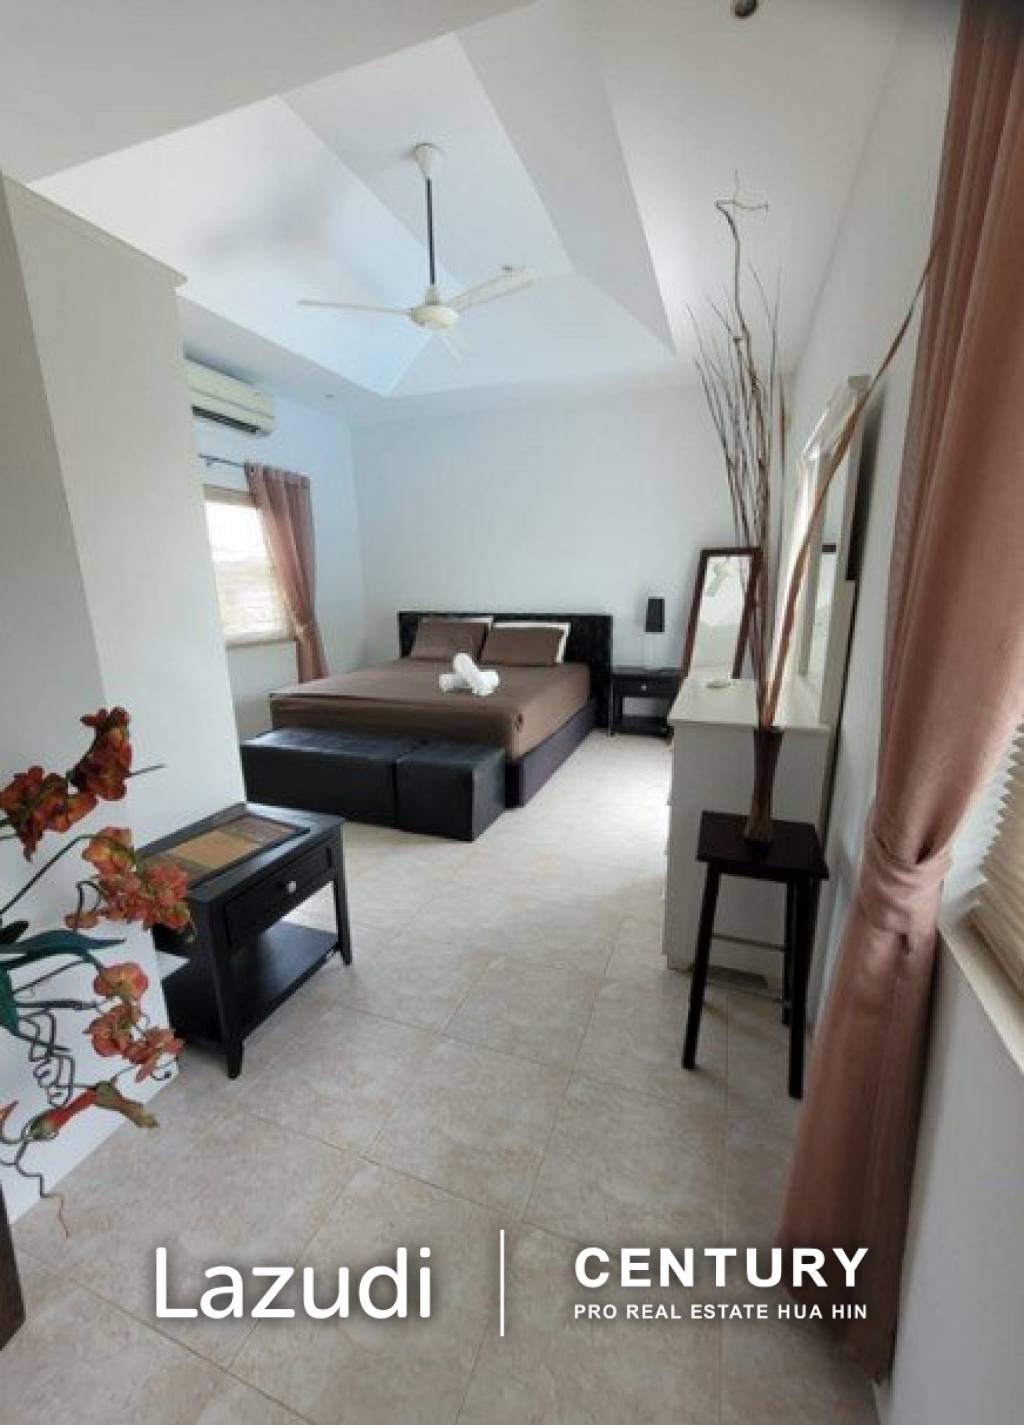 SMART HOUSE VILLAGE 2 :Good Quality 3 bed pool villa on good sized Corner Plot